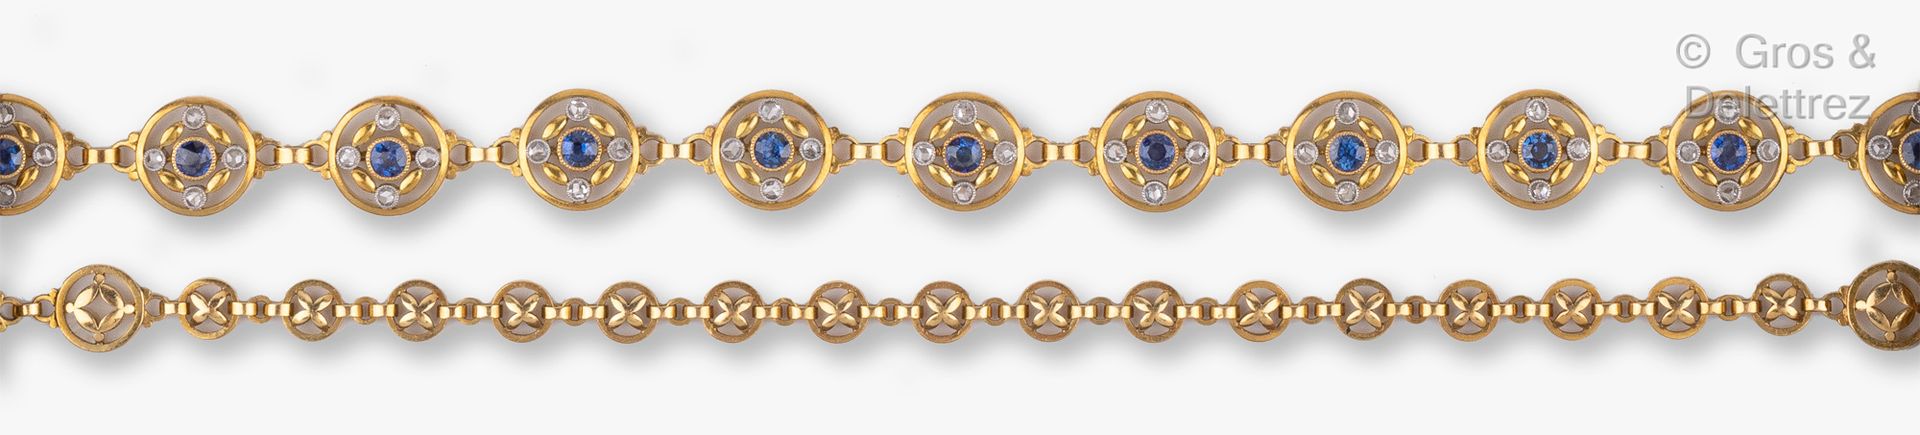 Null 黄金 "choker "项链，圆形链节上镶有蓝色宝石，边缘有玫瑰式切割钻石。它可以转化为两个手镯。长度：37厘米。毛重：22.9克。